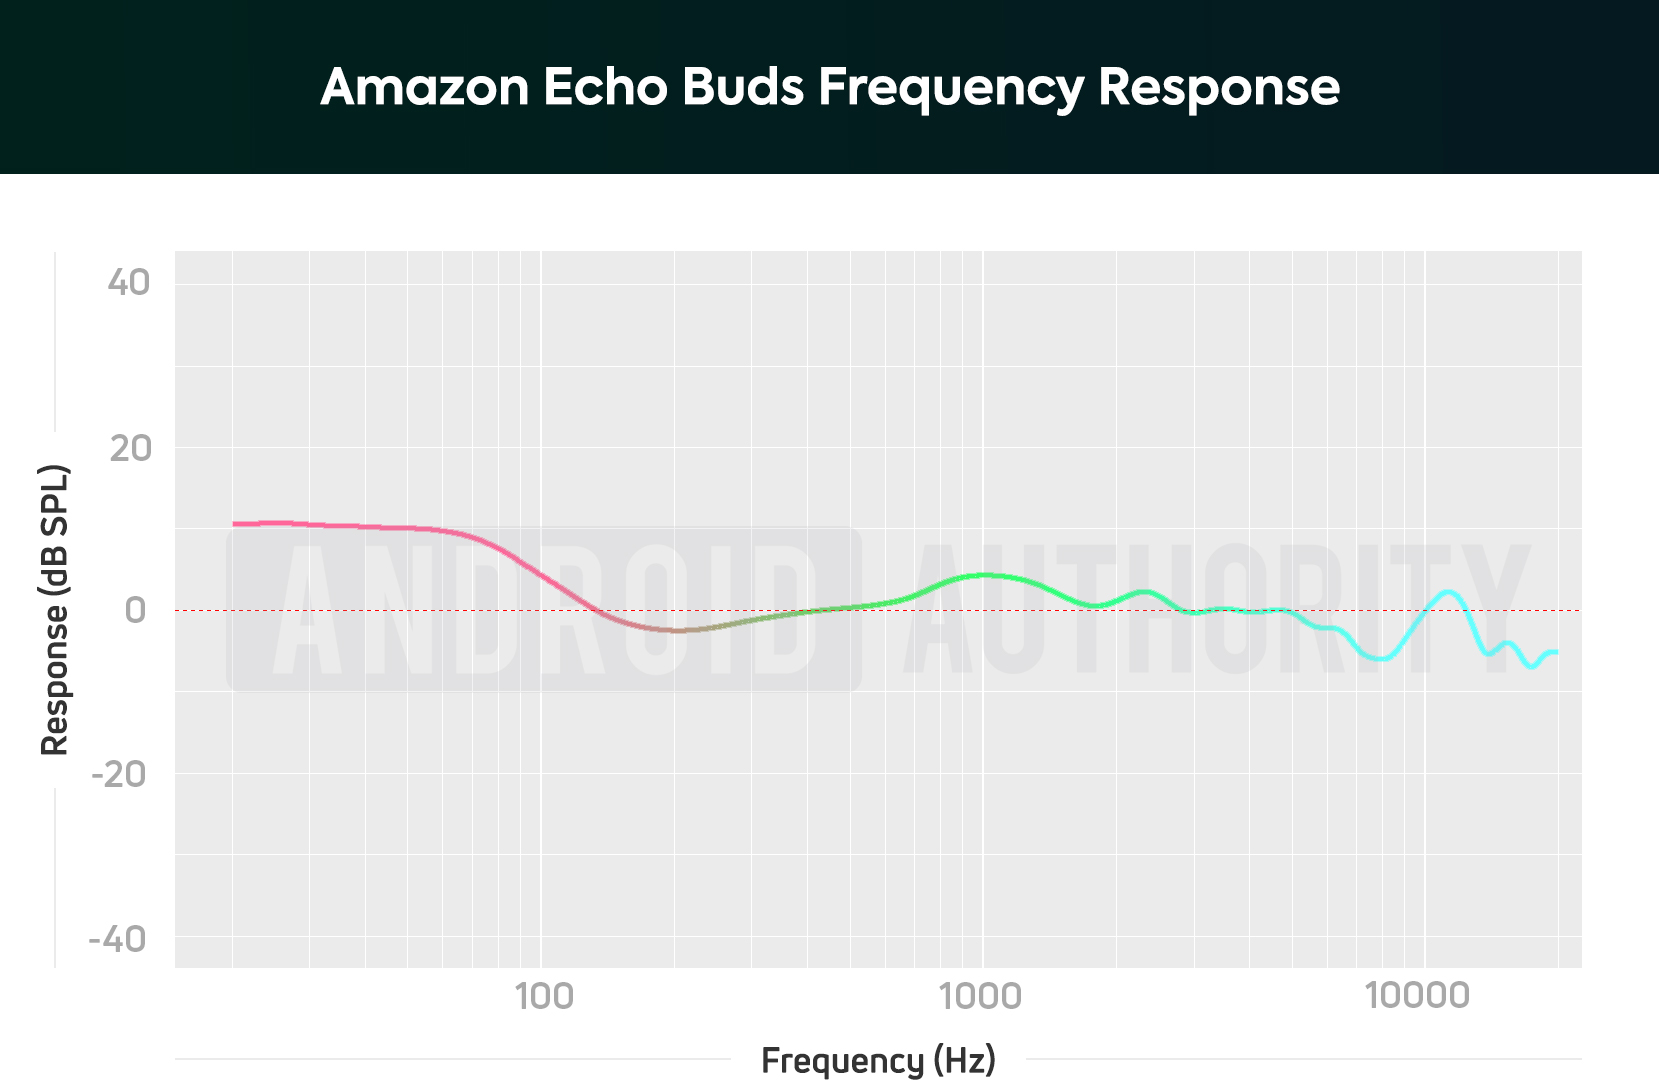 Amazon Echo Buds AA frequency response chart